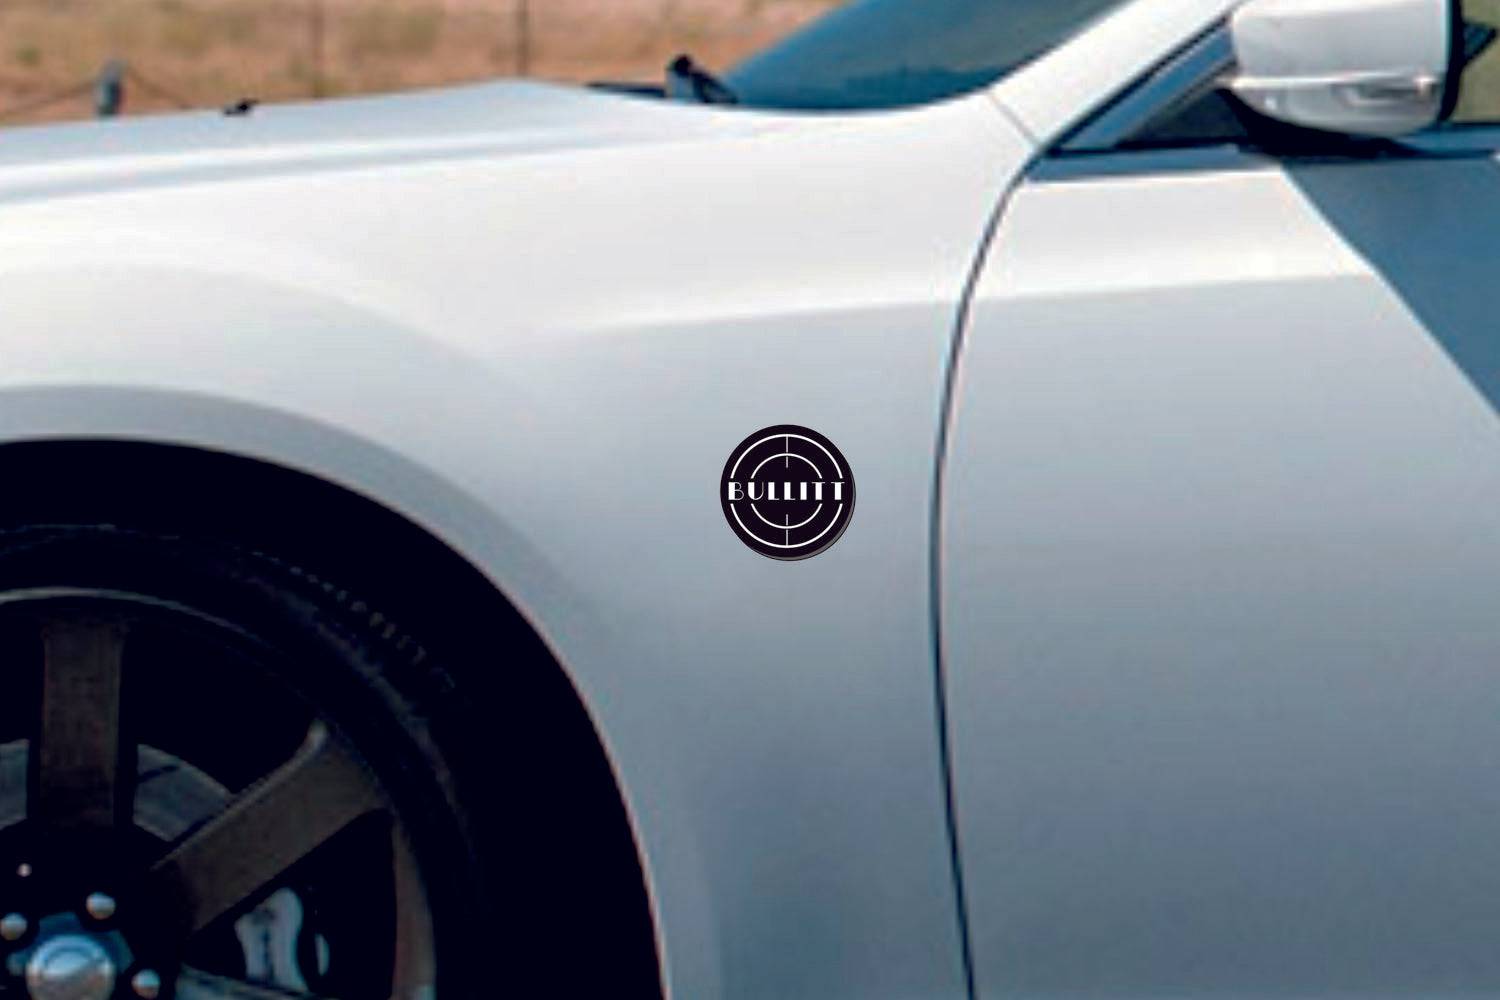 Ford emblem for fenders with Bullitt logo - decoinfabric